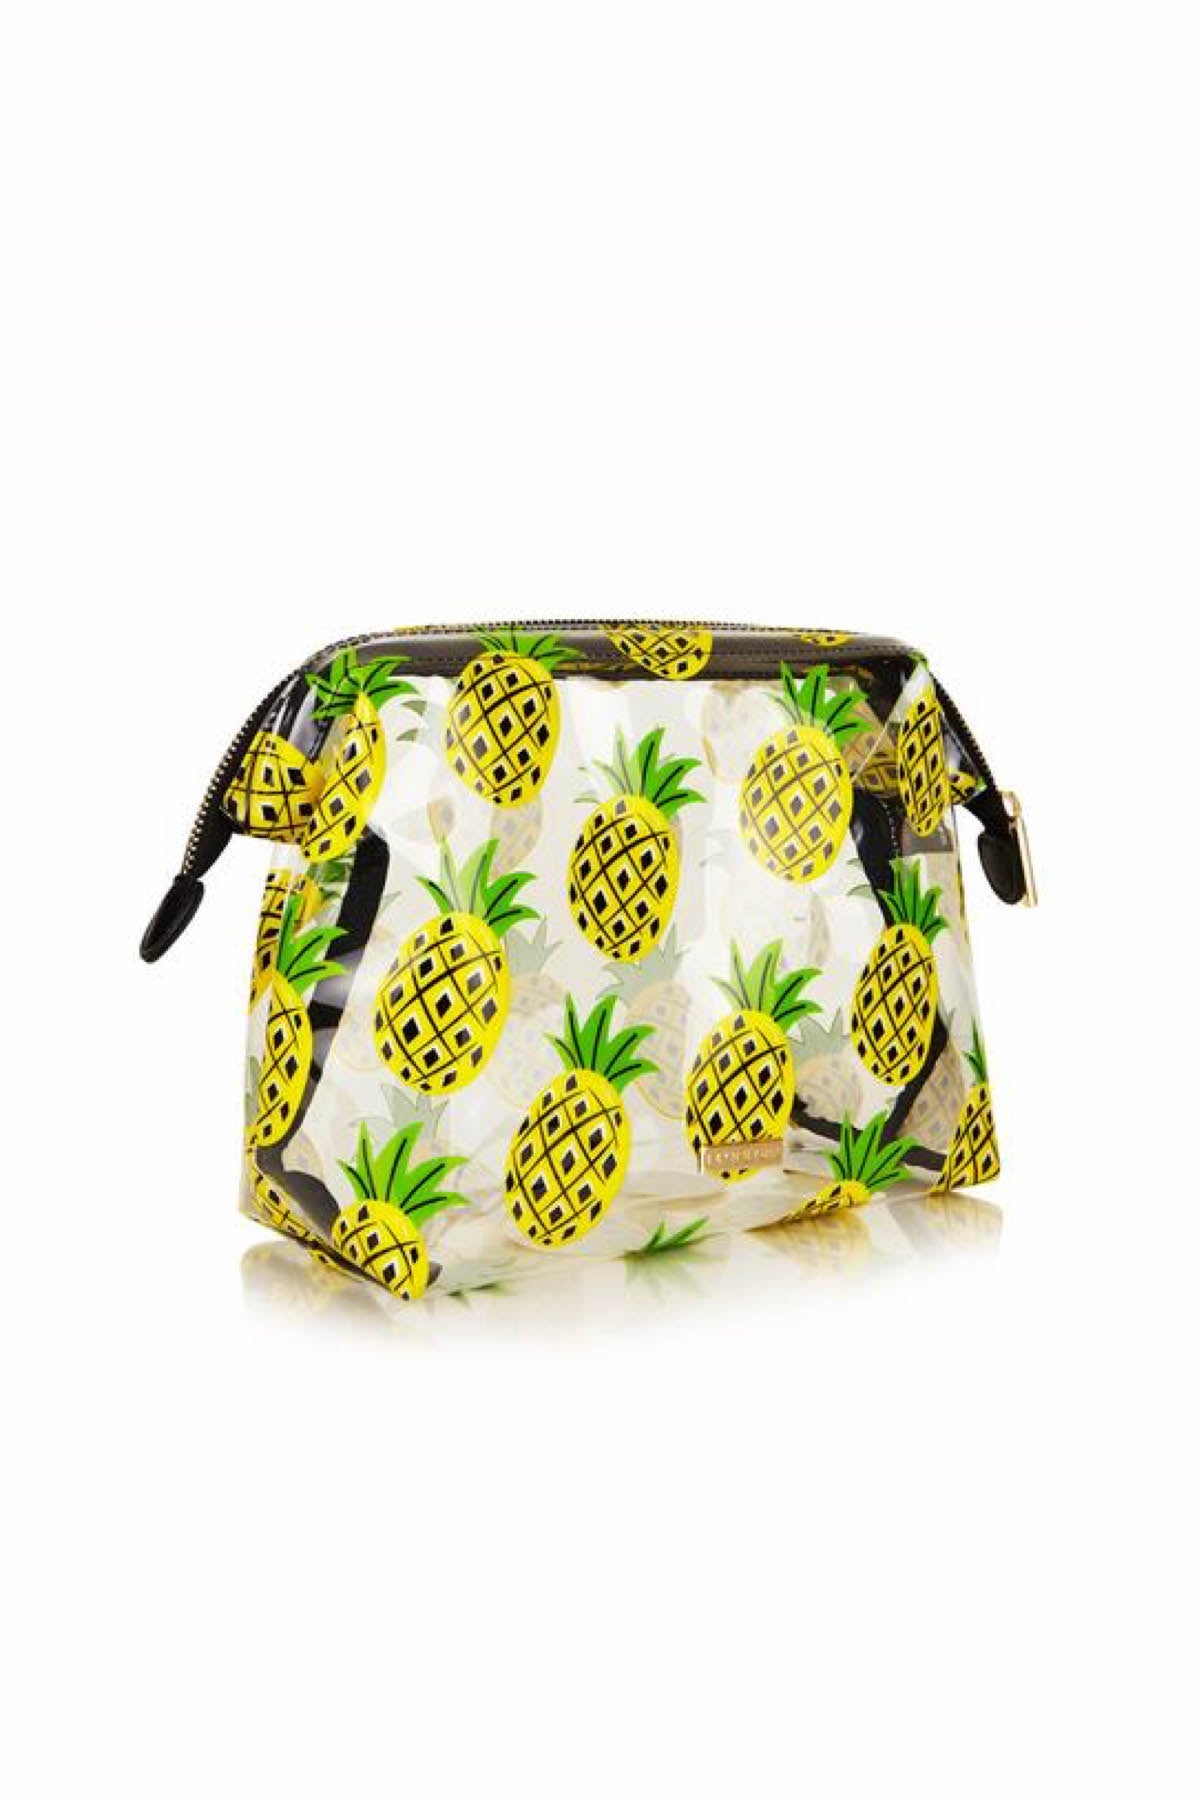 SkinnyDip London Zesty Pineapple Make-Up Bag